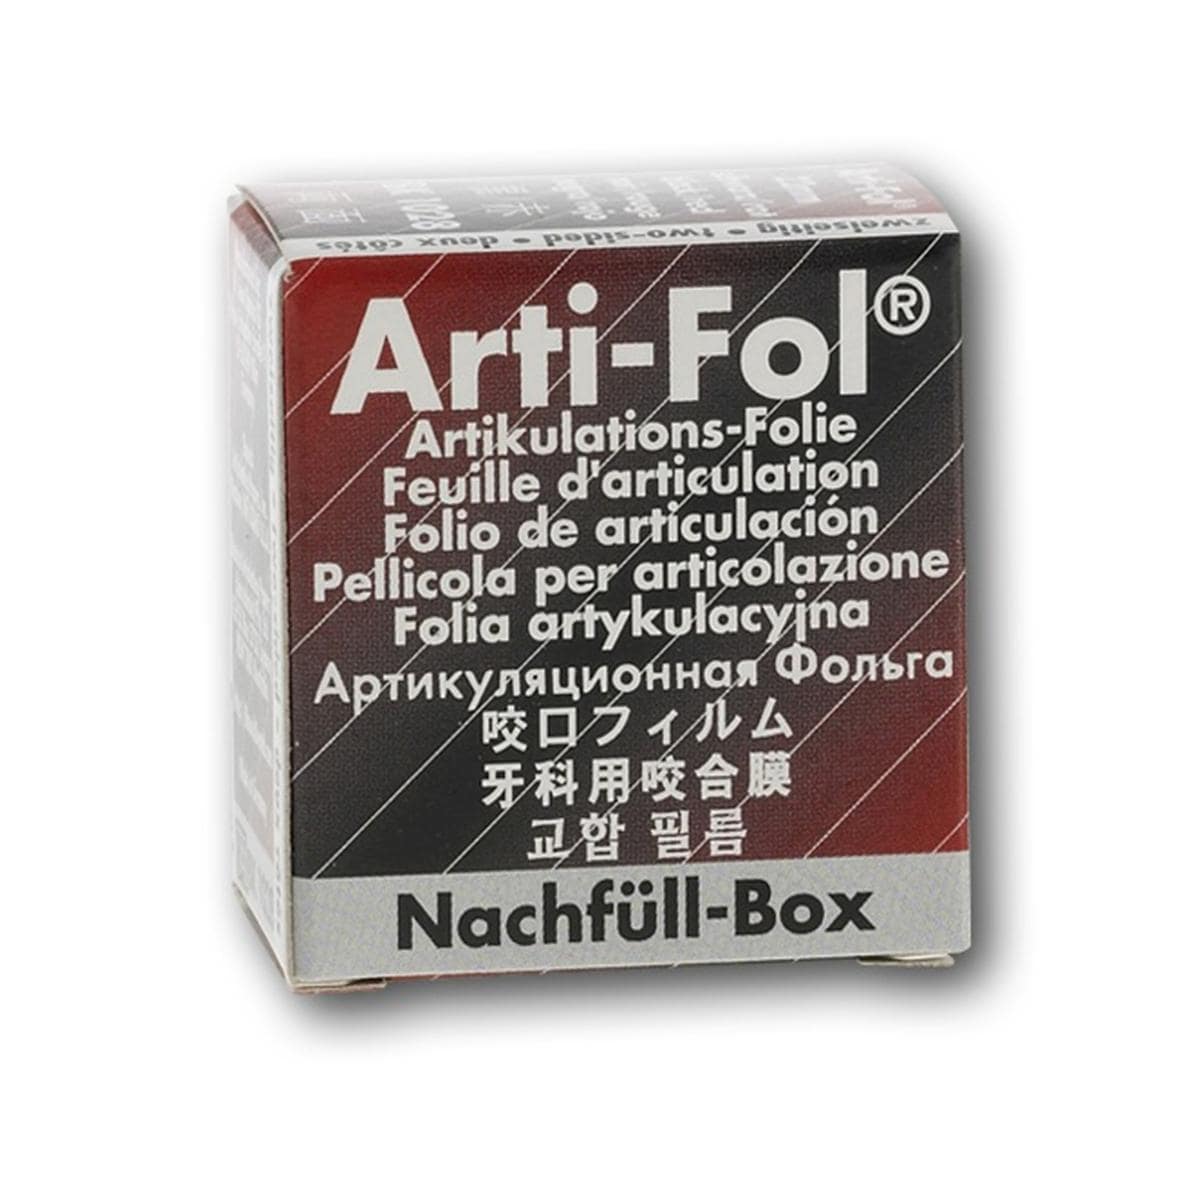 Arti-Fol metaal dubbelzijdig, 12 micron - navulling - BK1028, zwart/rood